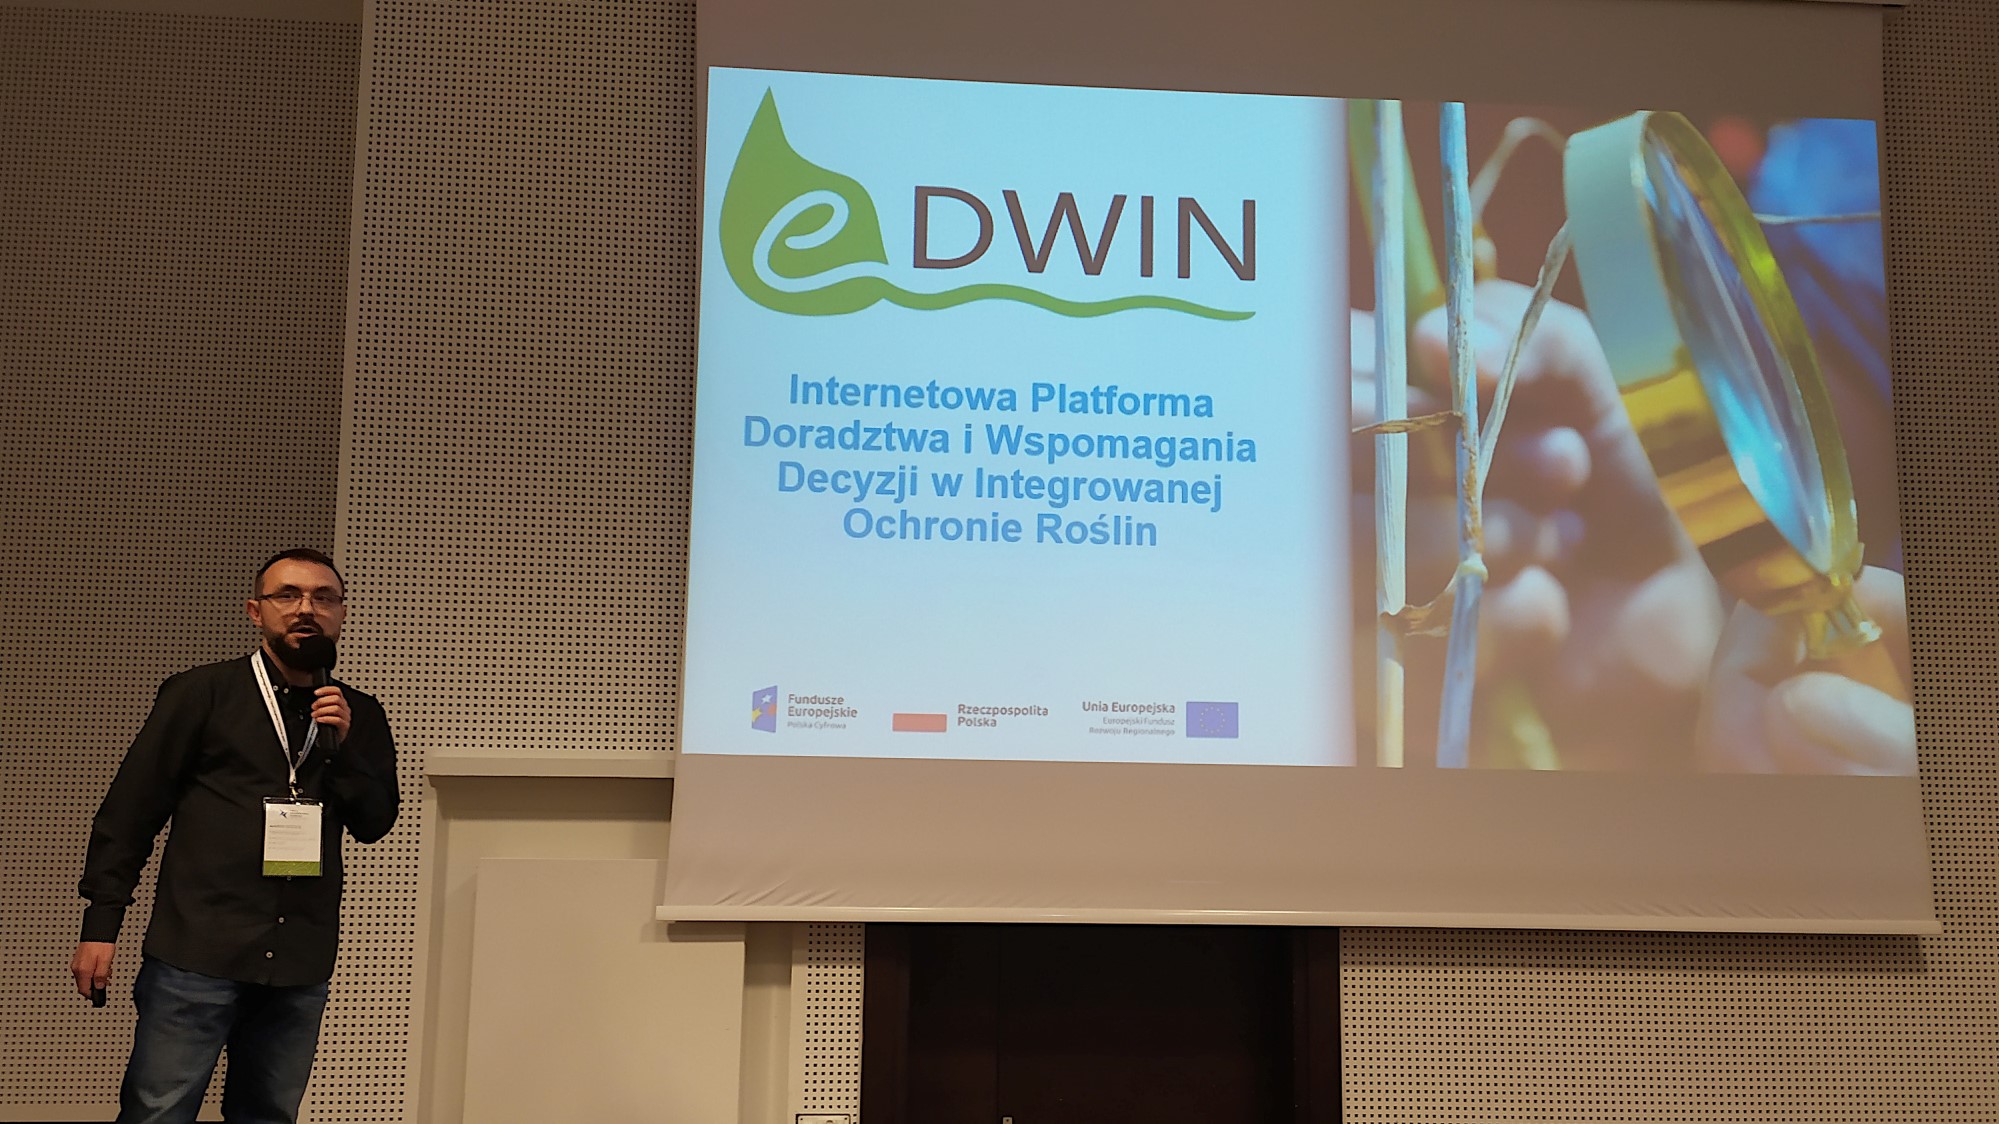 eDWIN project awarded at Intelligent Development Forum